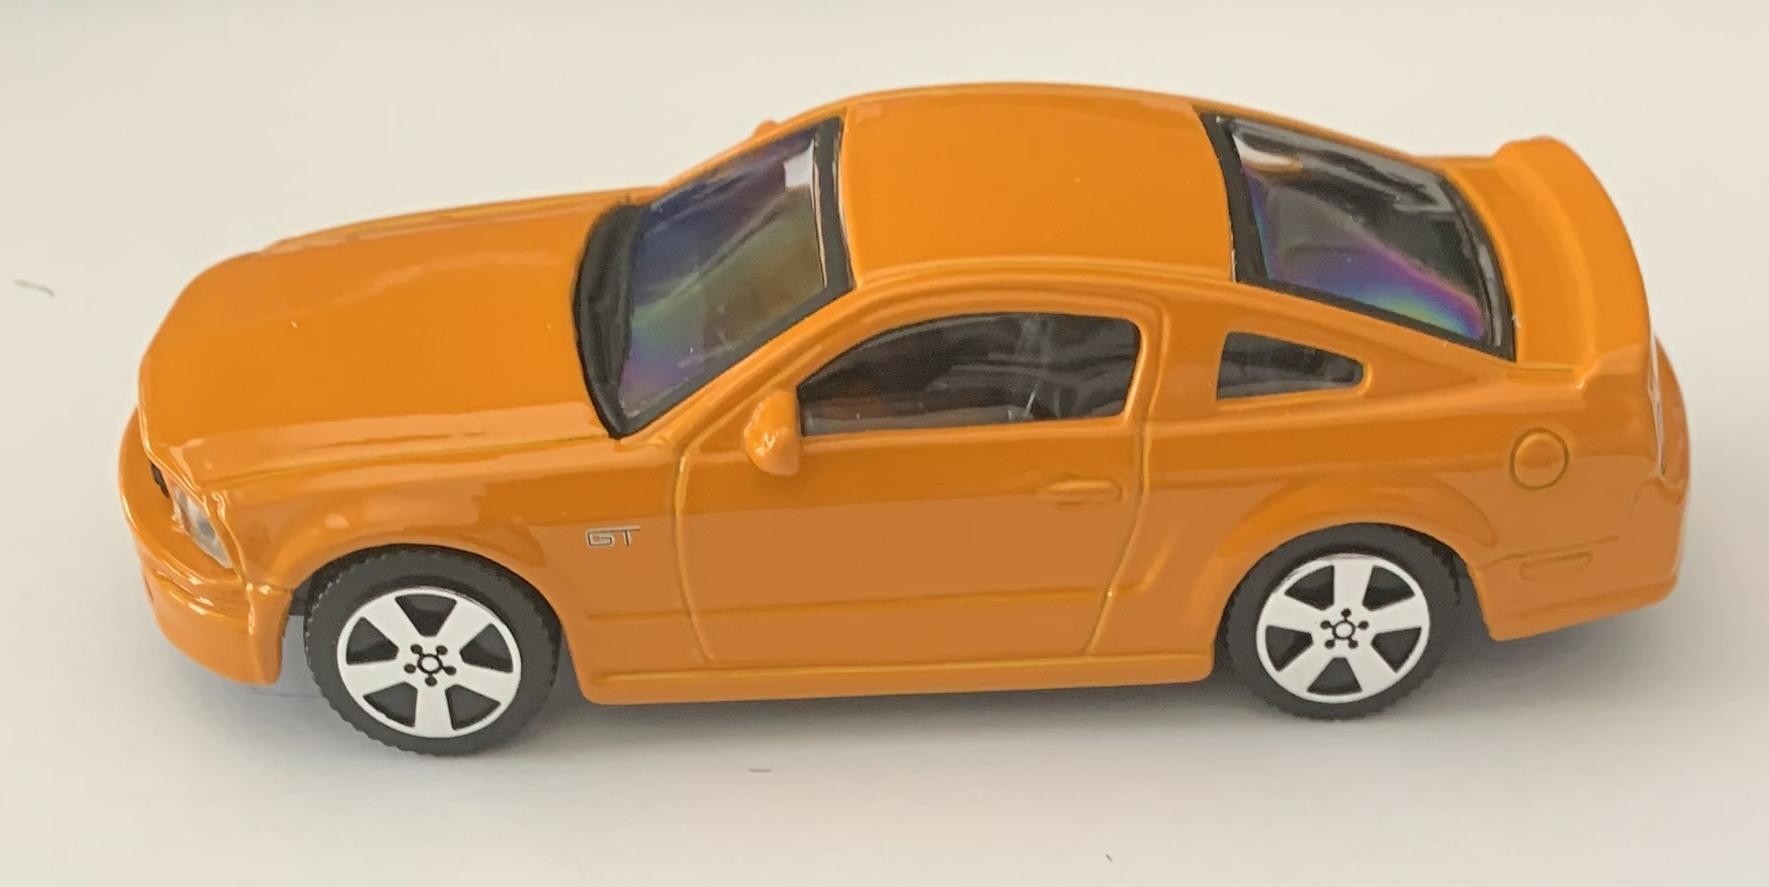 Ford Mustang GT 2006 in orange 1:43 scale model from Bburago, streetfire